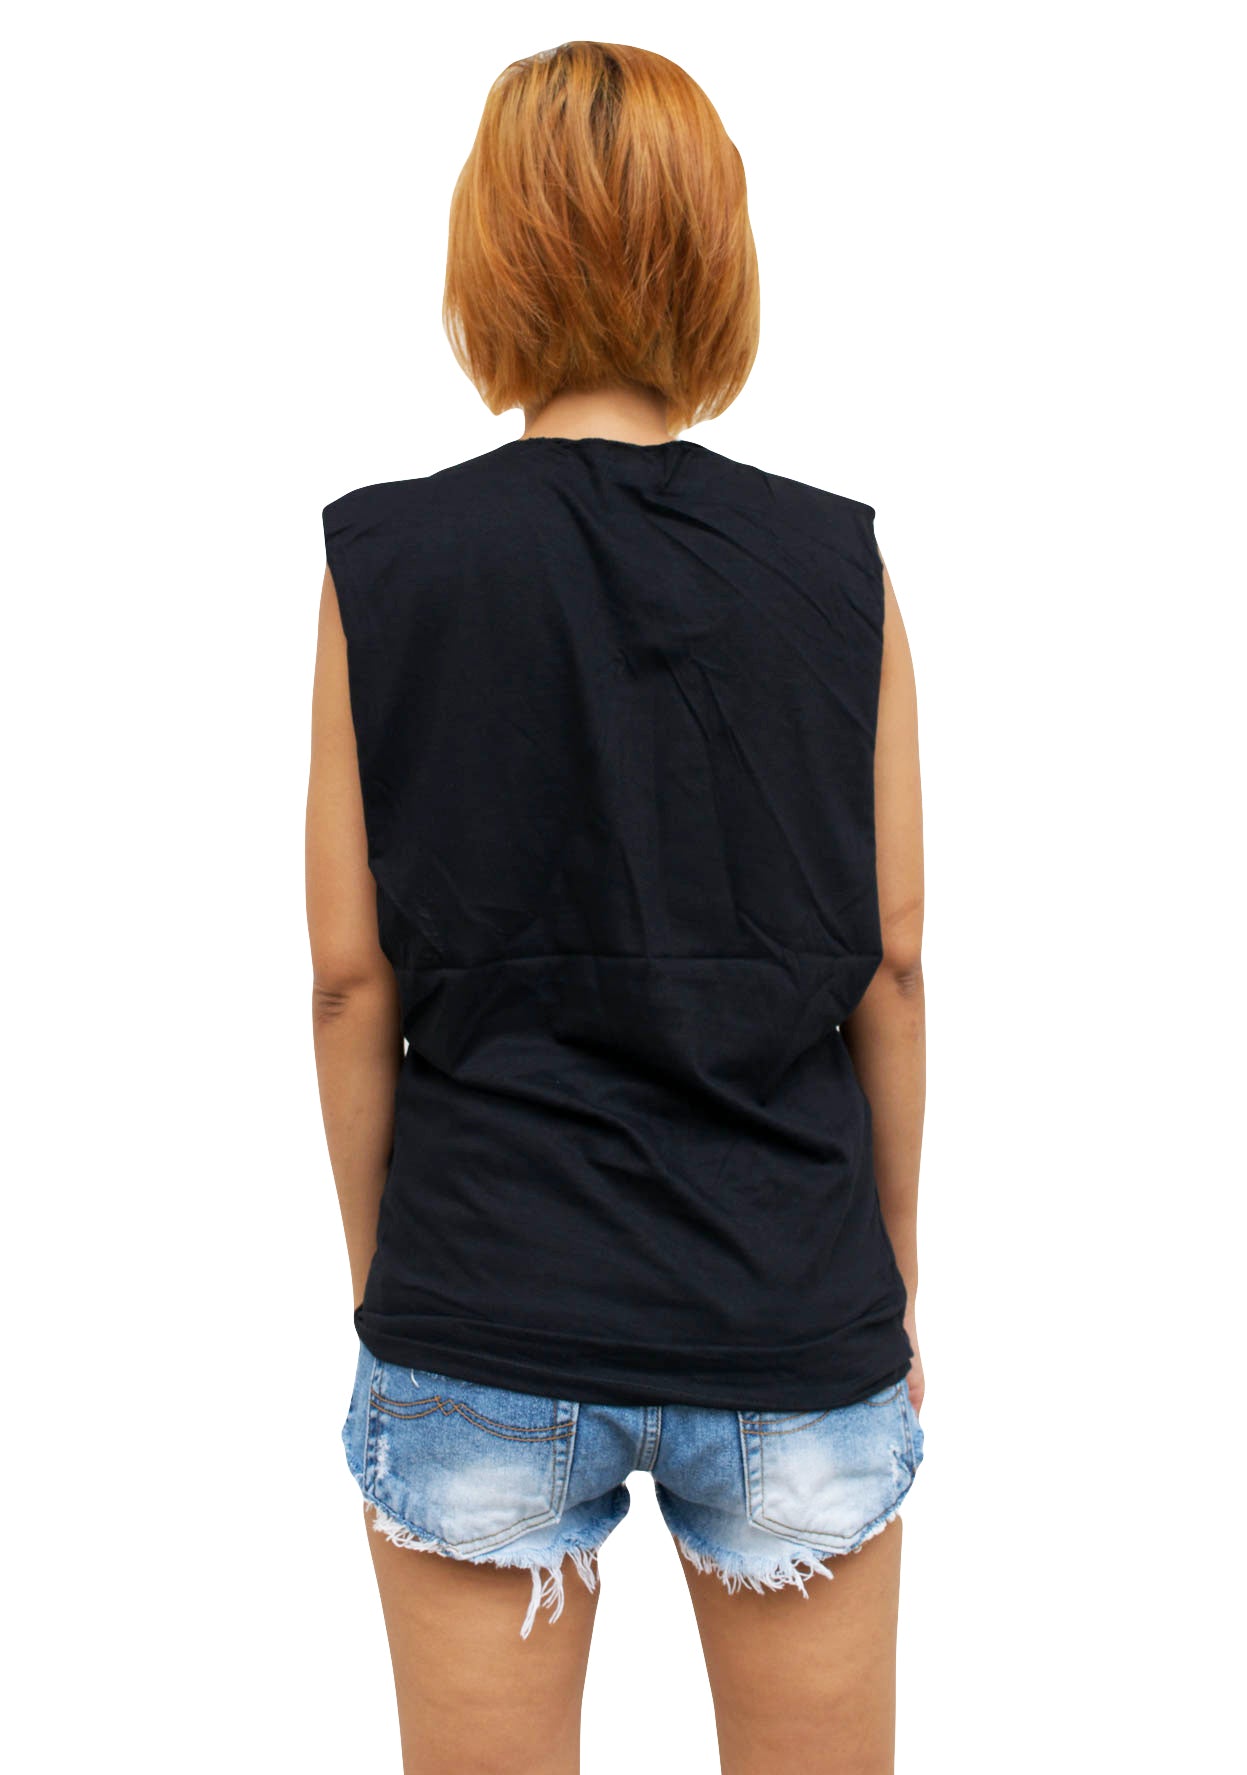 Ladies Faith No More Vest Tank-Top Singlet Sleeveless T-Shirt